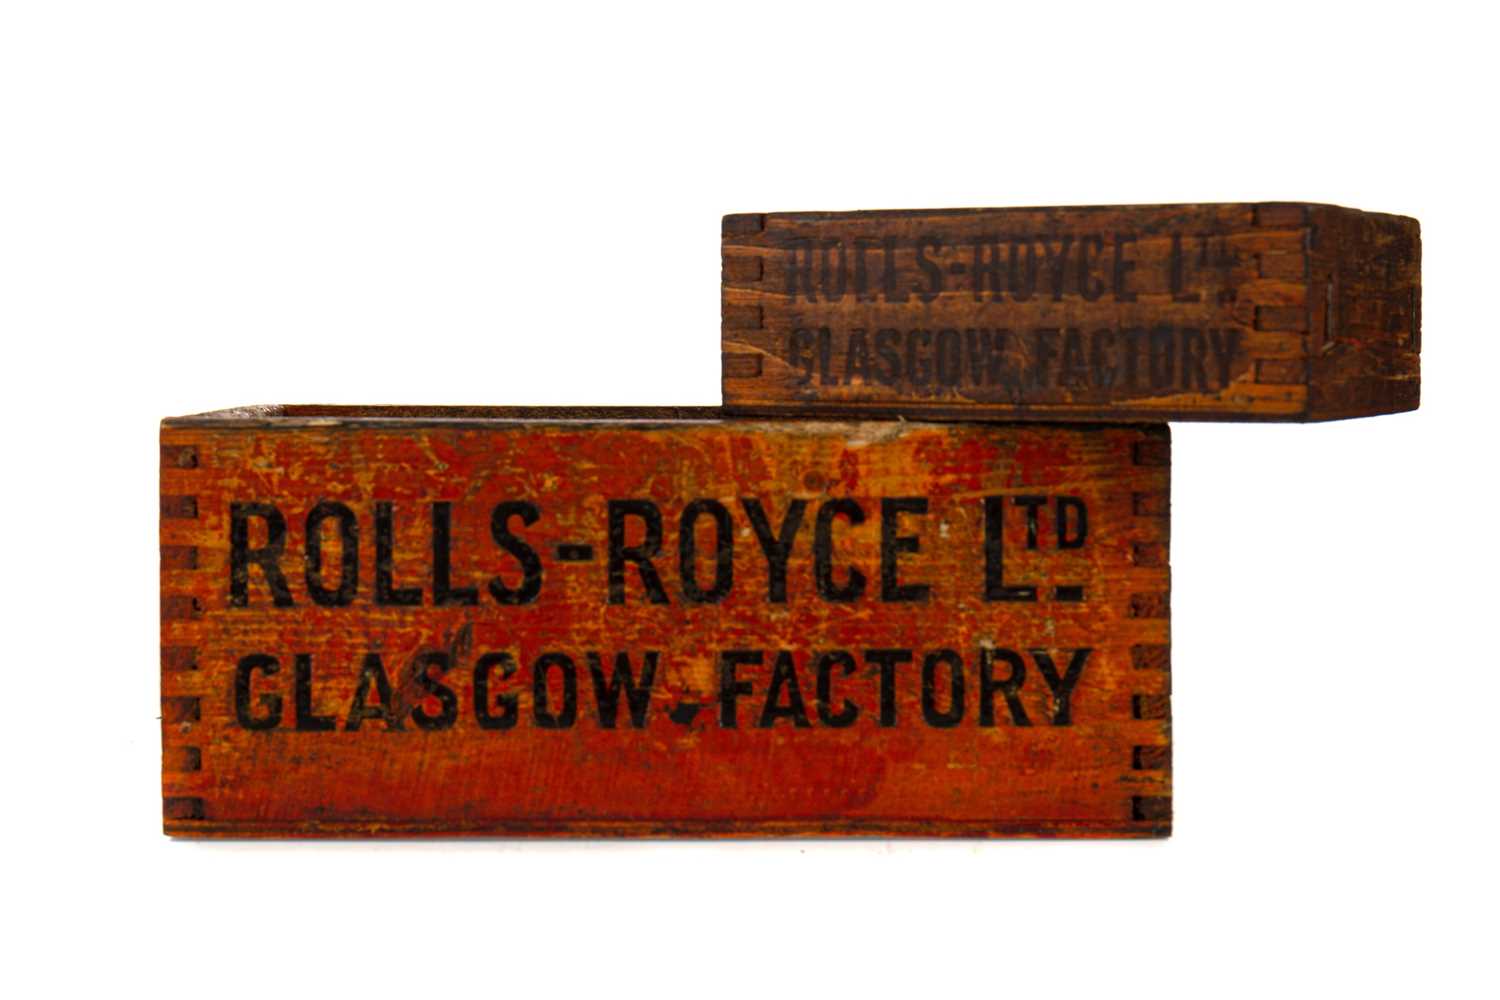 Lot 1303 - TWO 'ROLLS-ROYCE LTD. GLASGOW FACTORY' BOXES